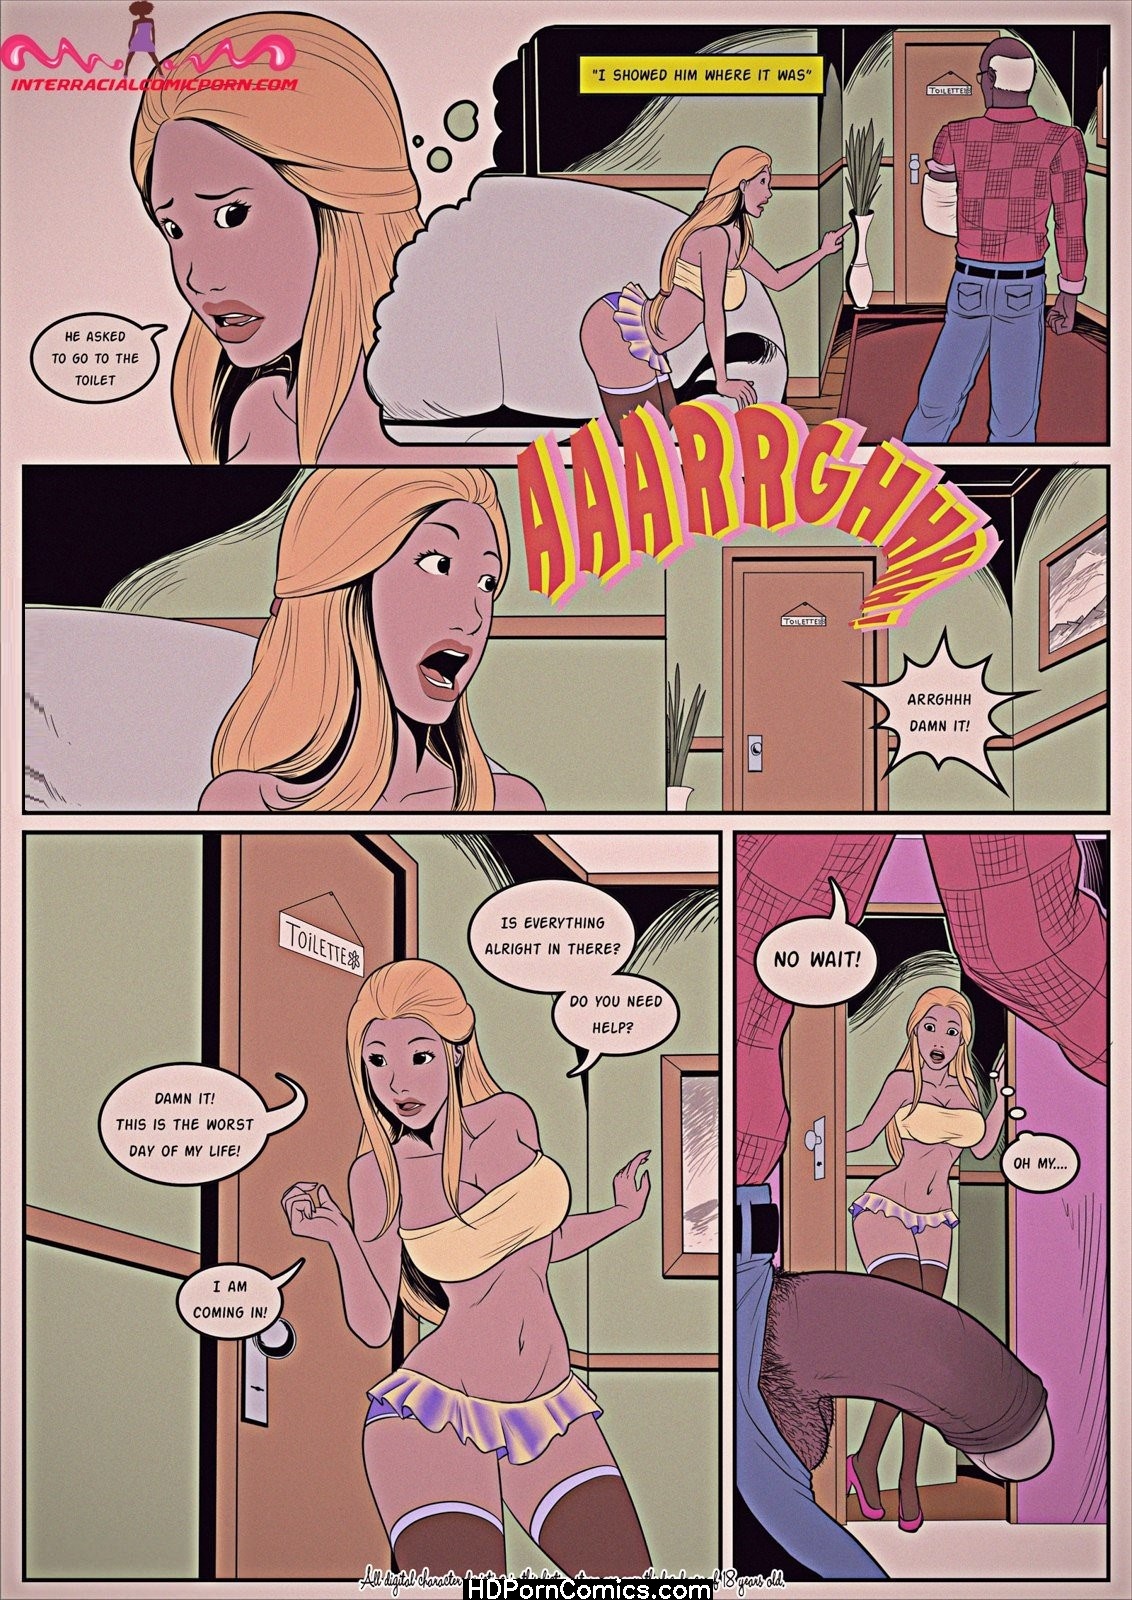 The Plumber - Issue 2 Cartoon Porn Comic - HD Porn Comix